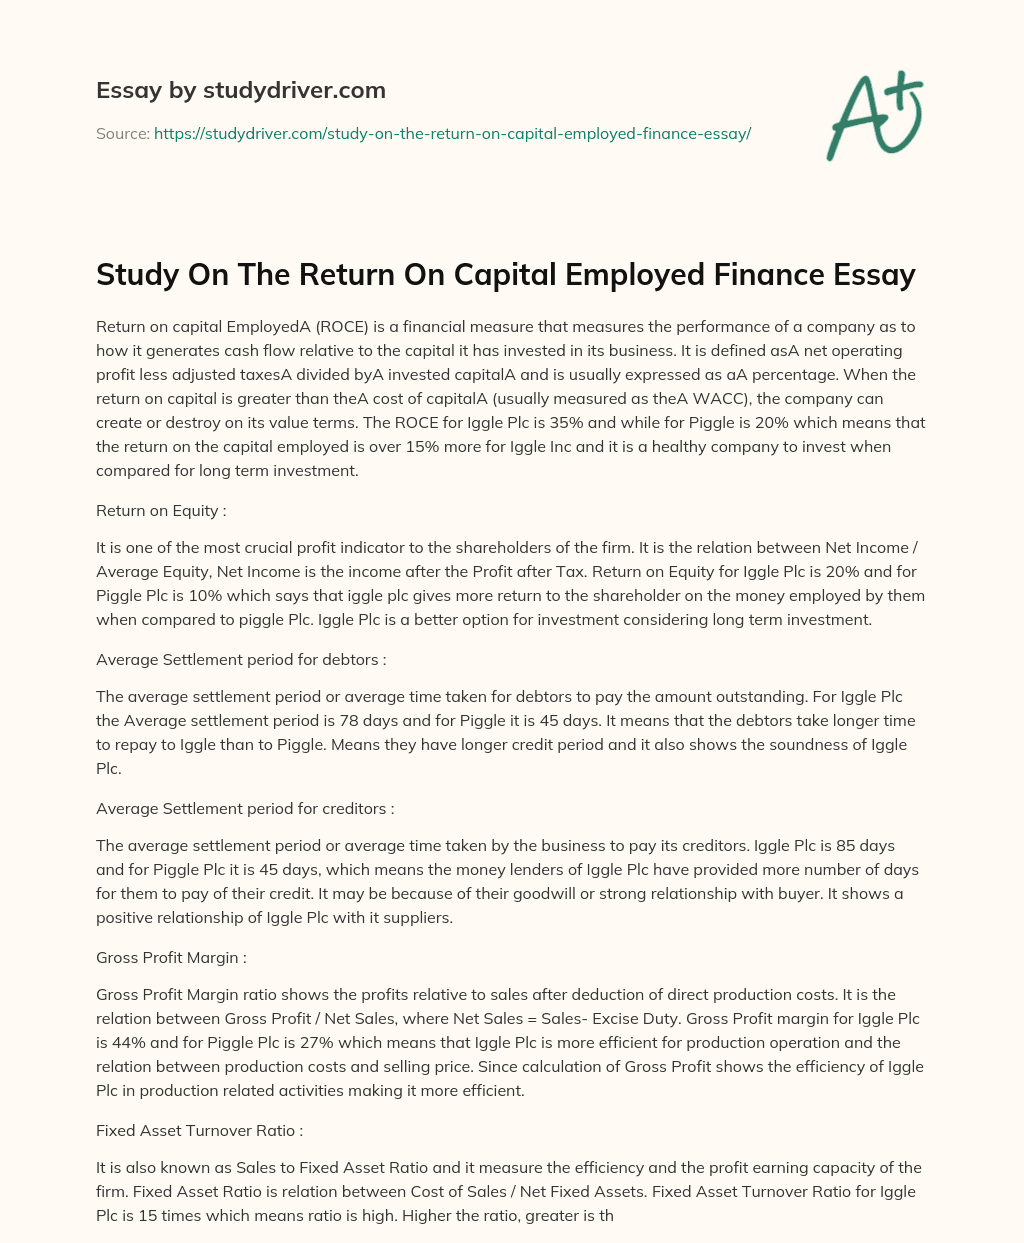 Study on the Return on Capital Employed Finance Essay essay